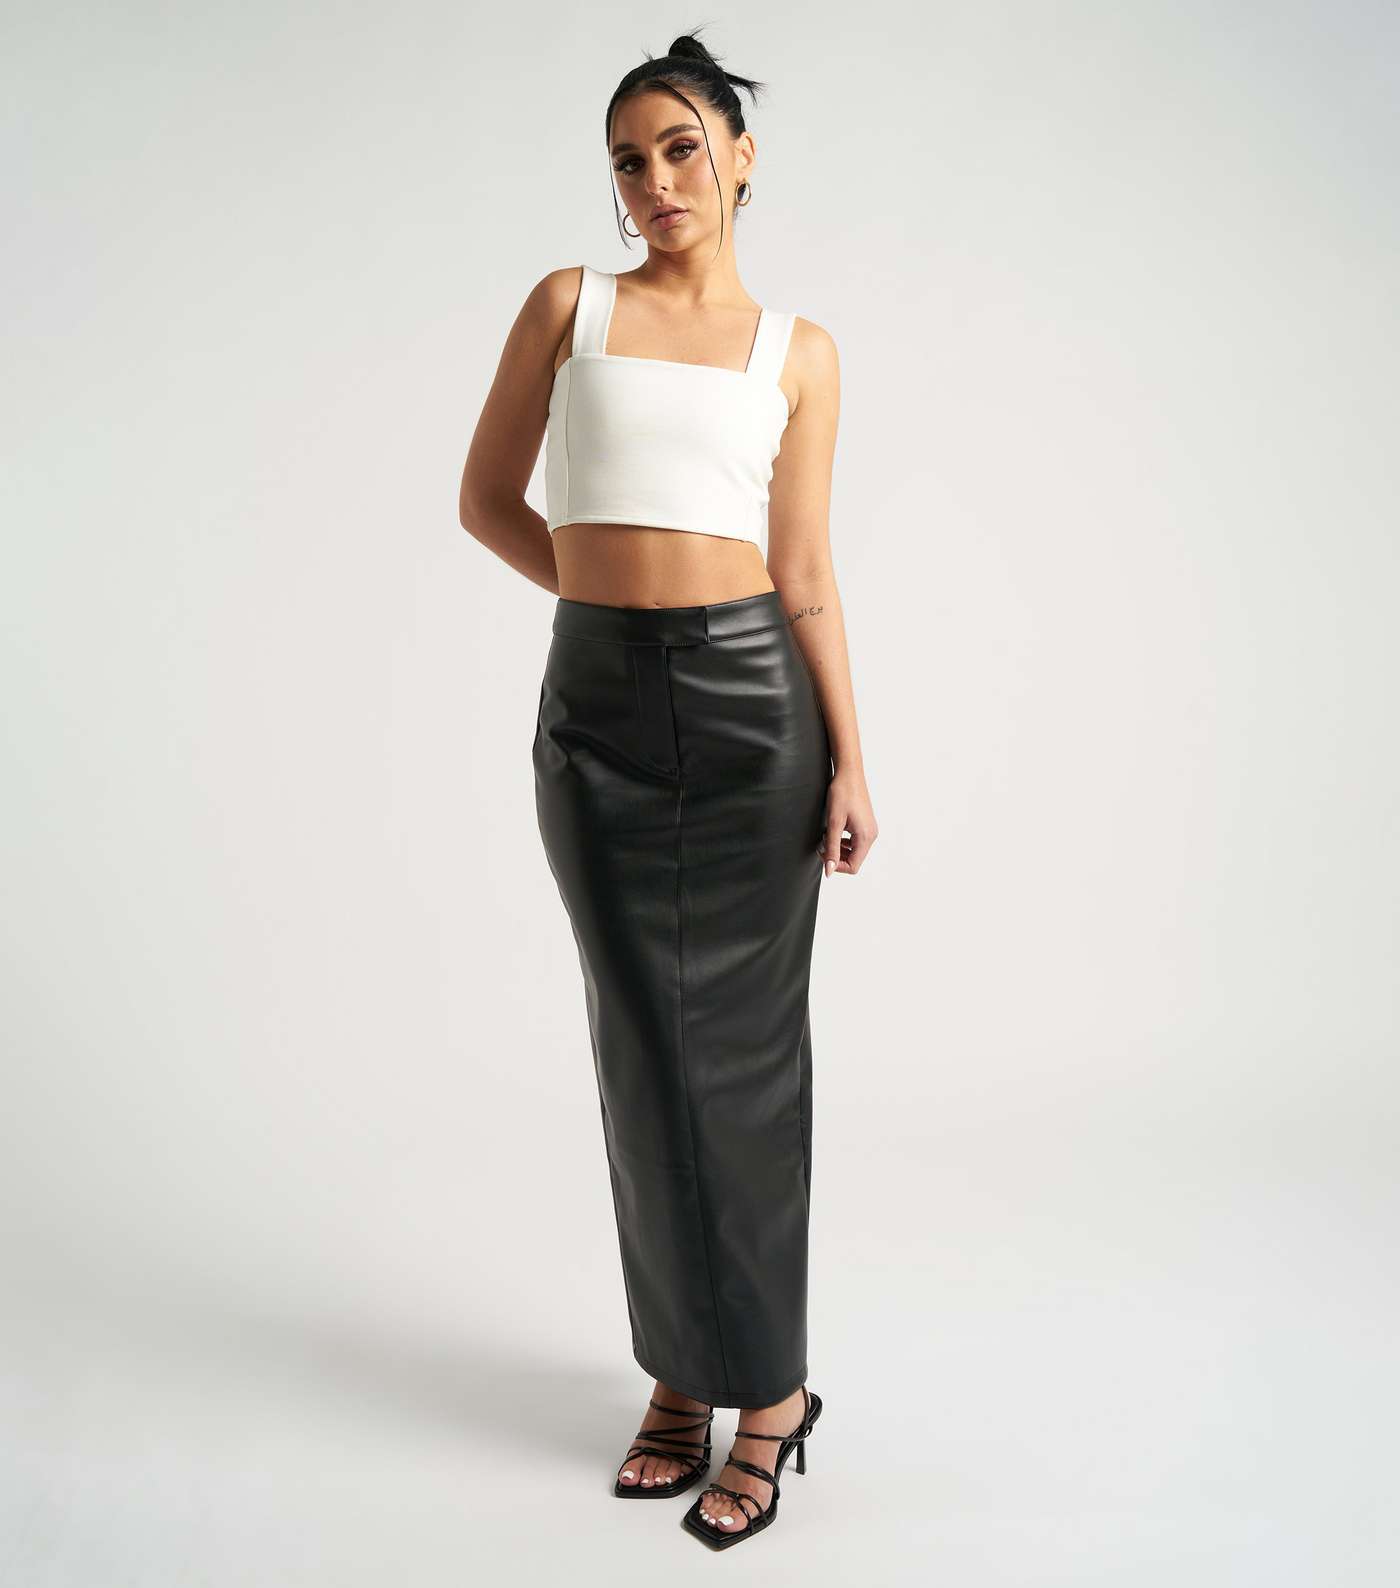 Urban Bliss Black Leather-Look Maxi Skirt Image 3